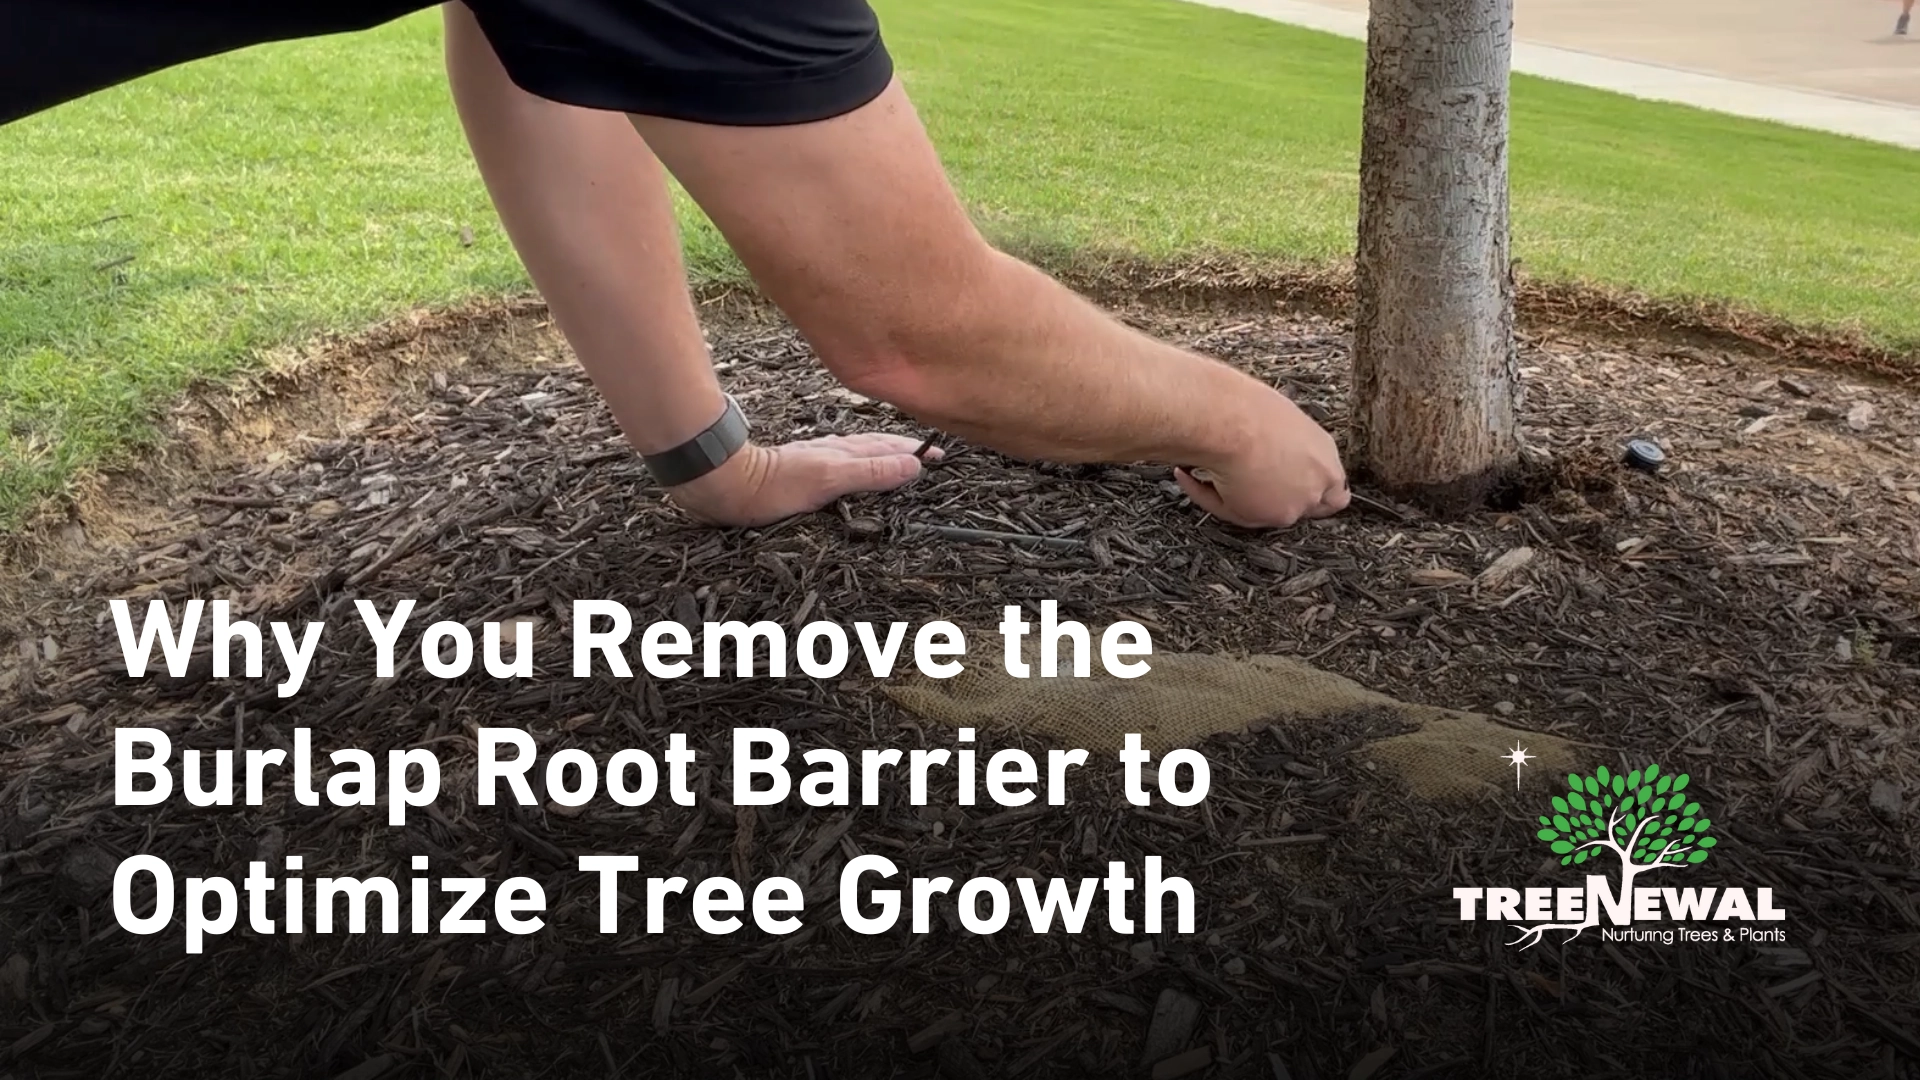 Tree Growth, Tree Care